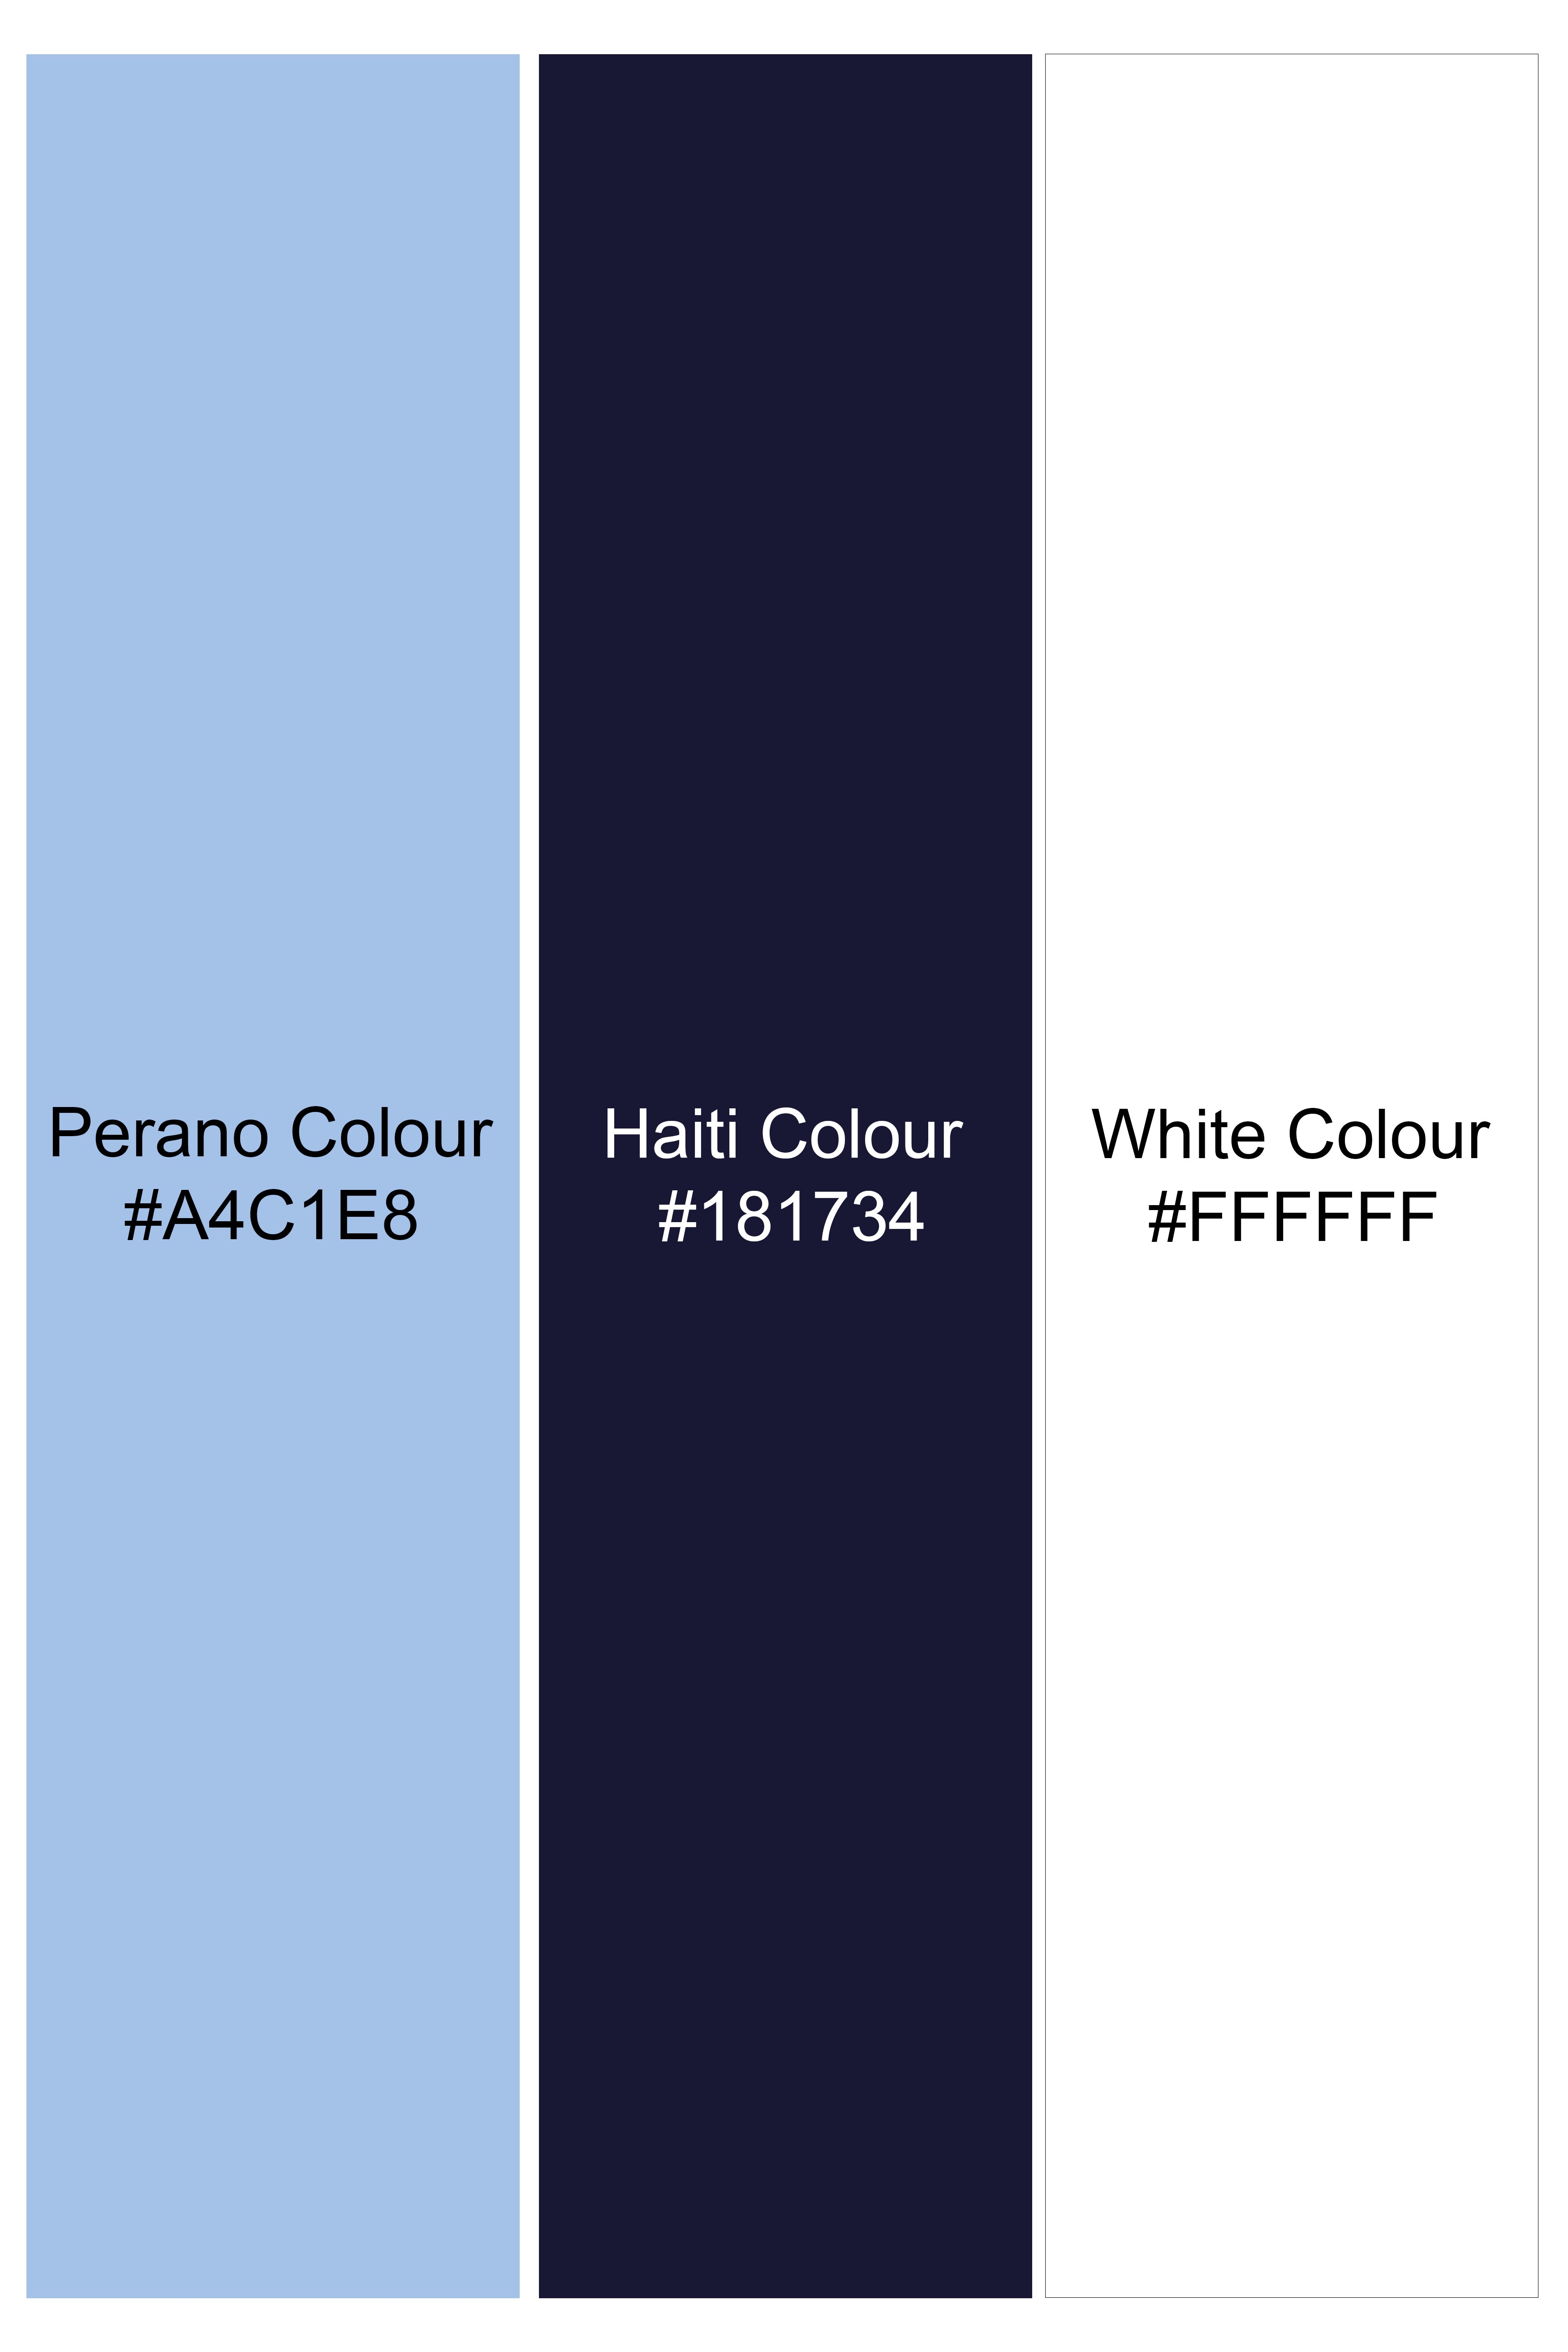 Perano Blue with Haiti Blue and White Premium Cotton Flat Knit Polo TS928-S, TS928-M, TS928-L, TS928-XL, TS928-XXL